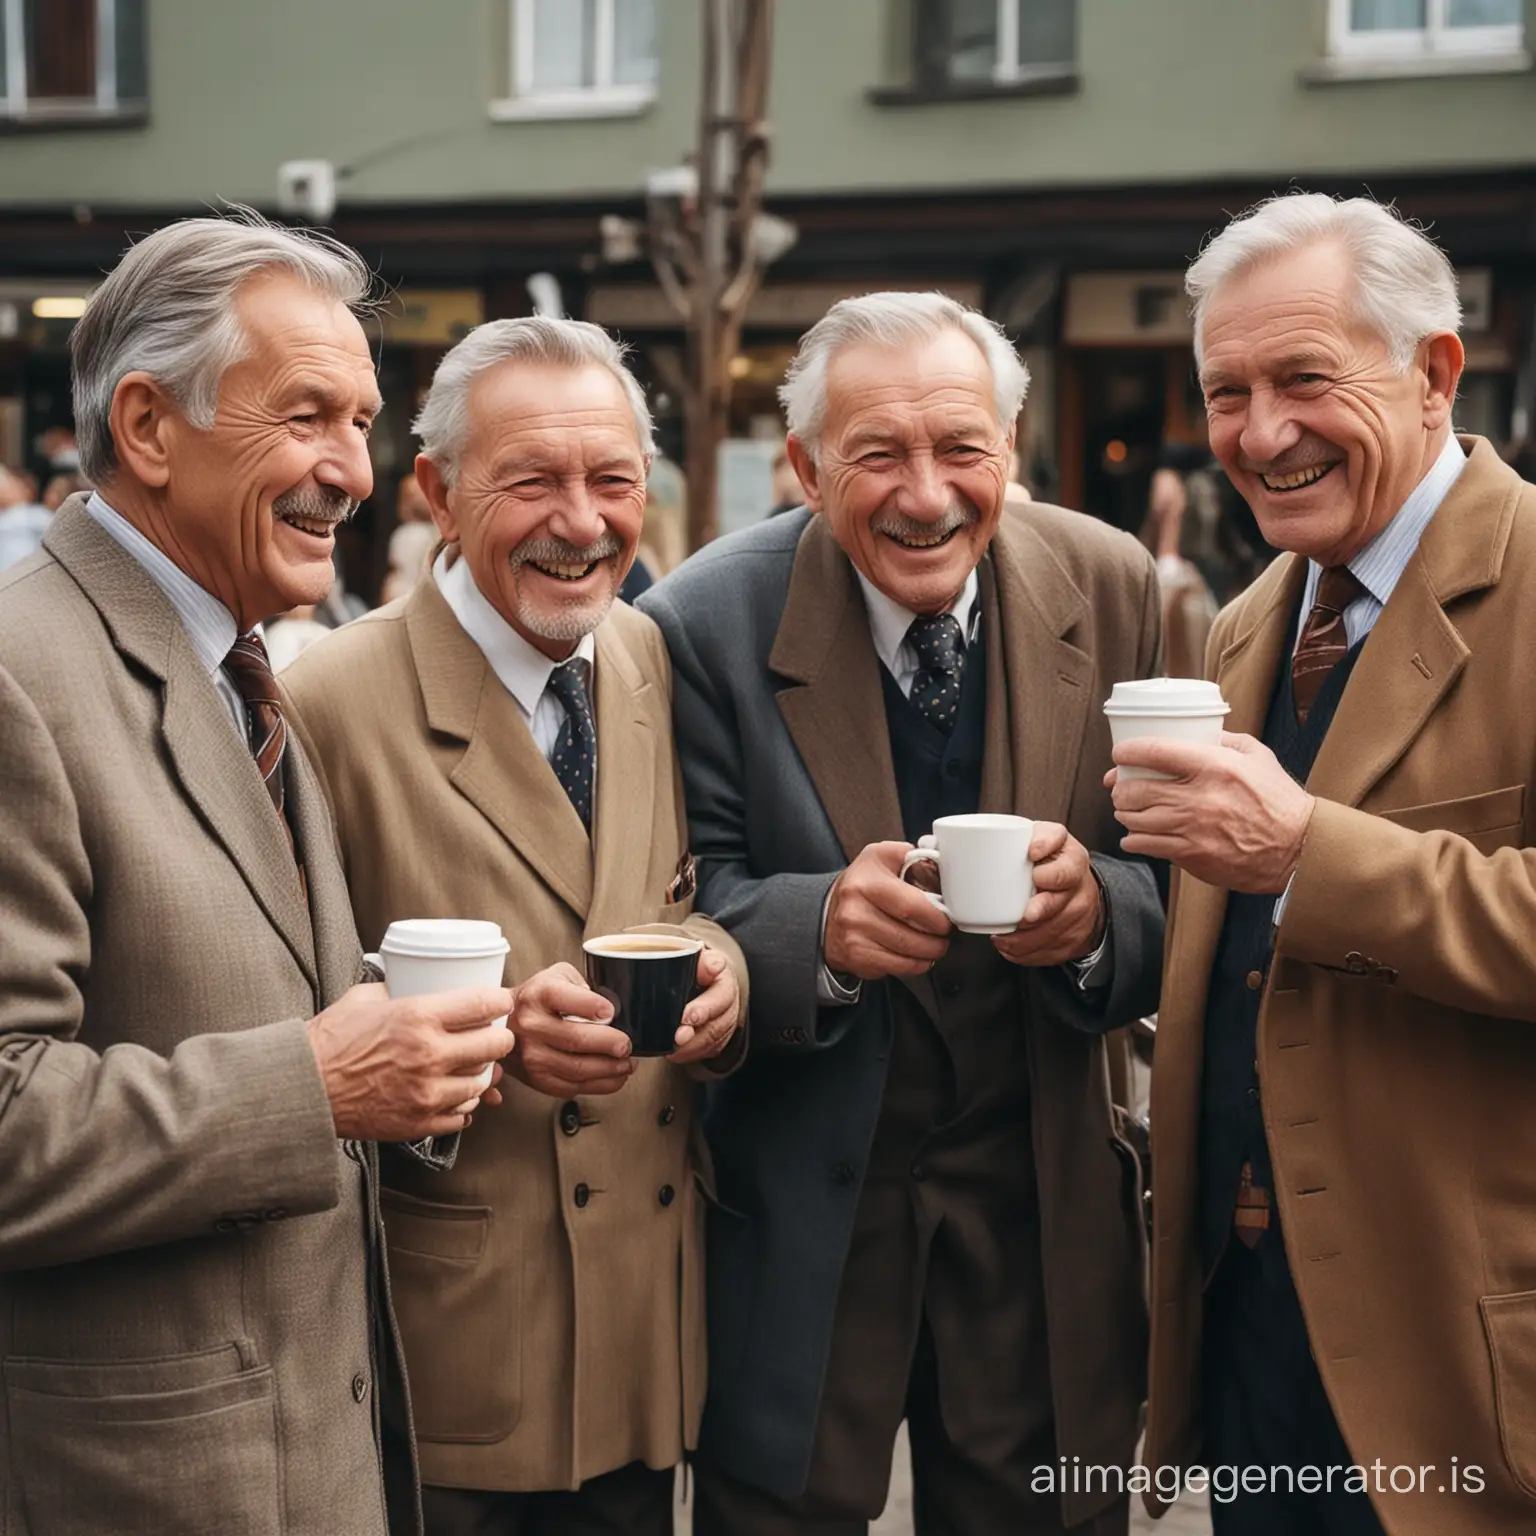 A group of well-dress elderly men, shot height, having coffee